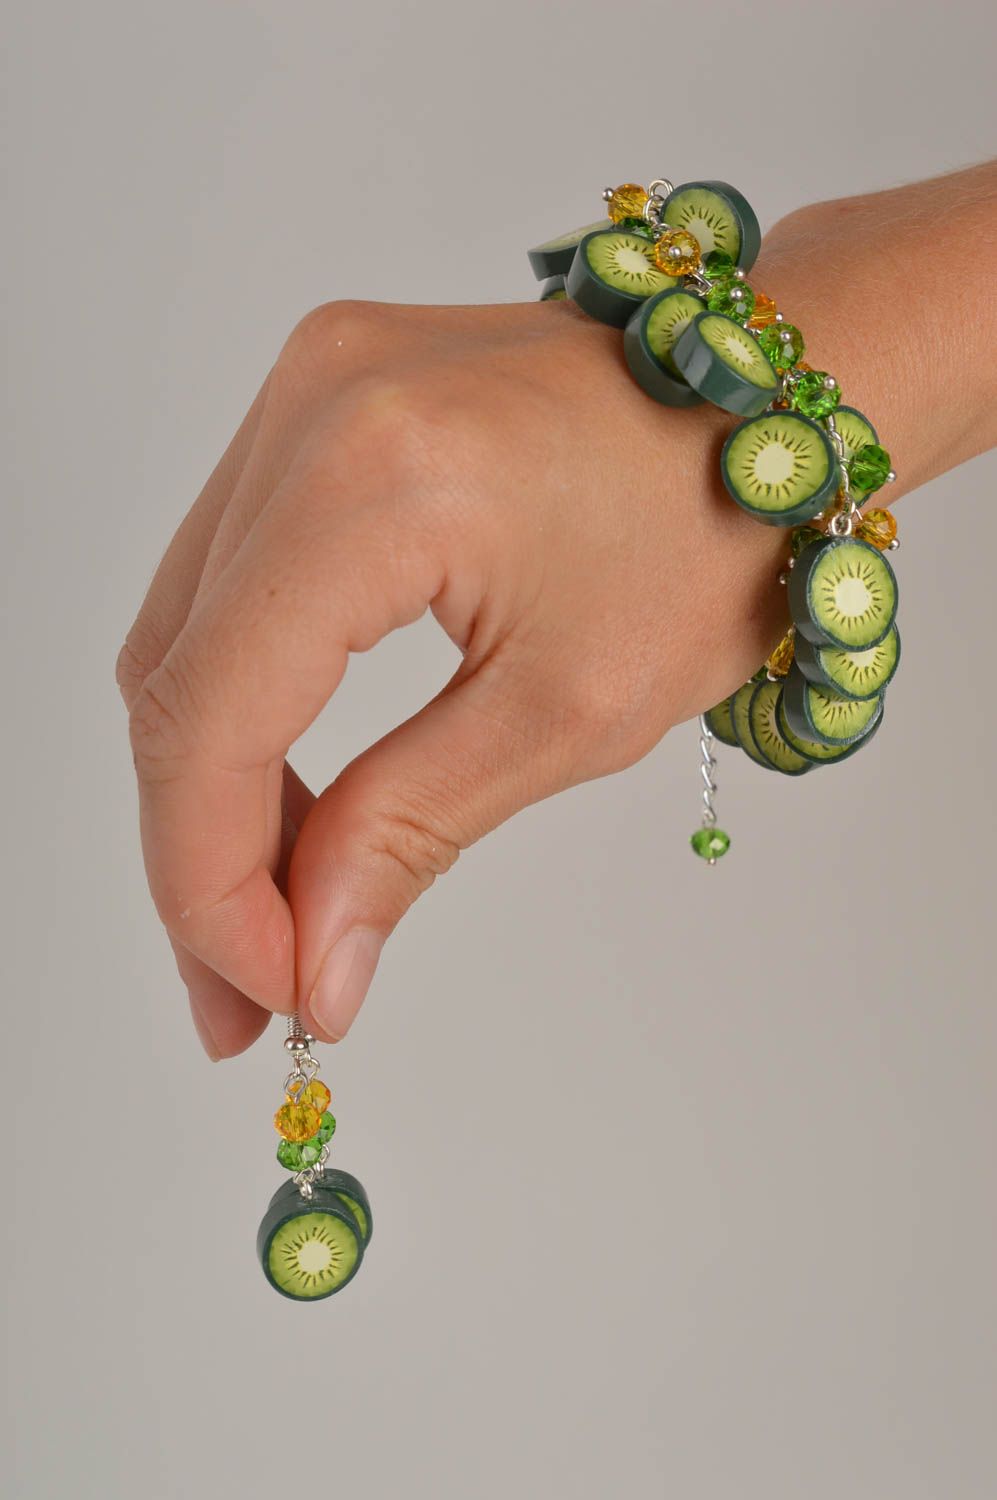 Wrist bracelet fashion earrings polymer clay jewelry green kiwi women jewelry  photo 2